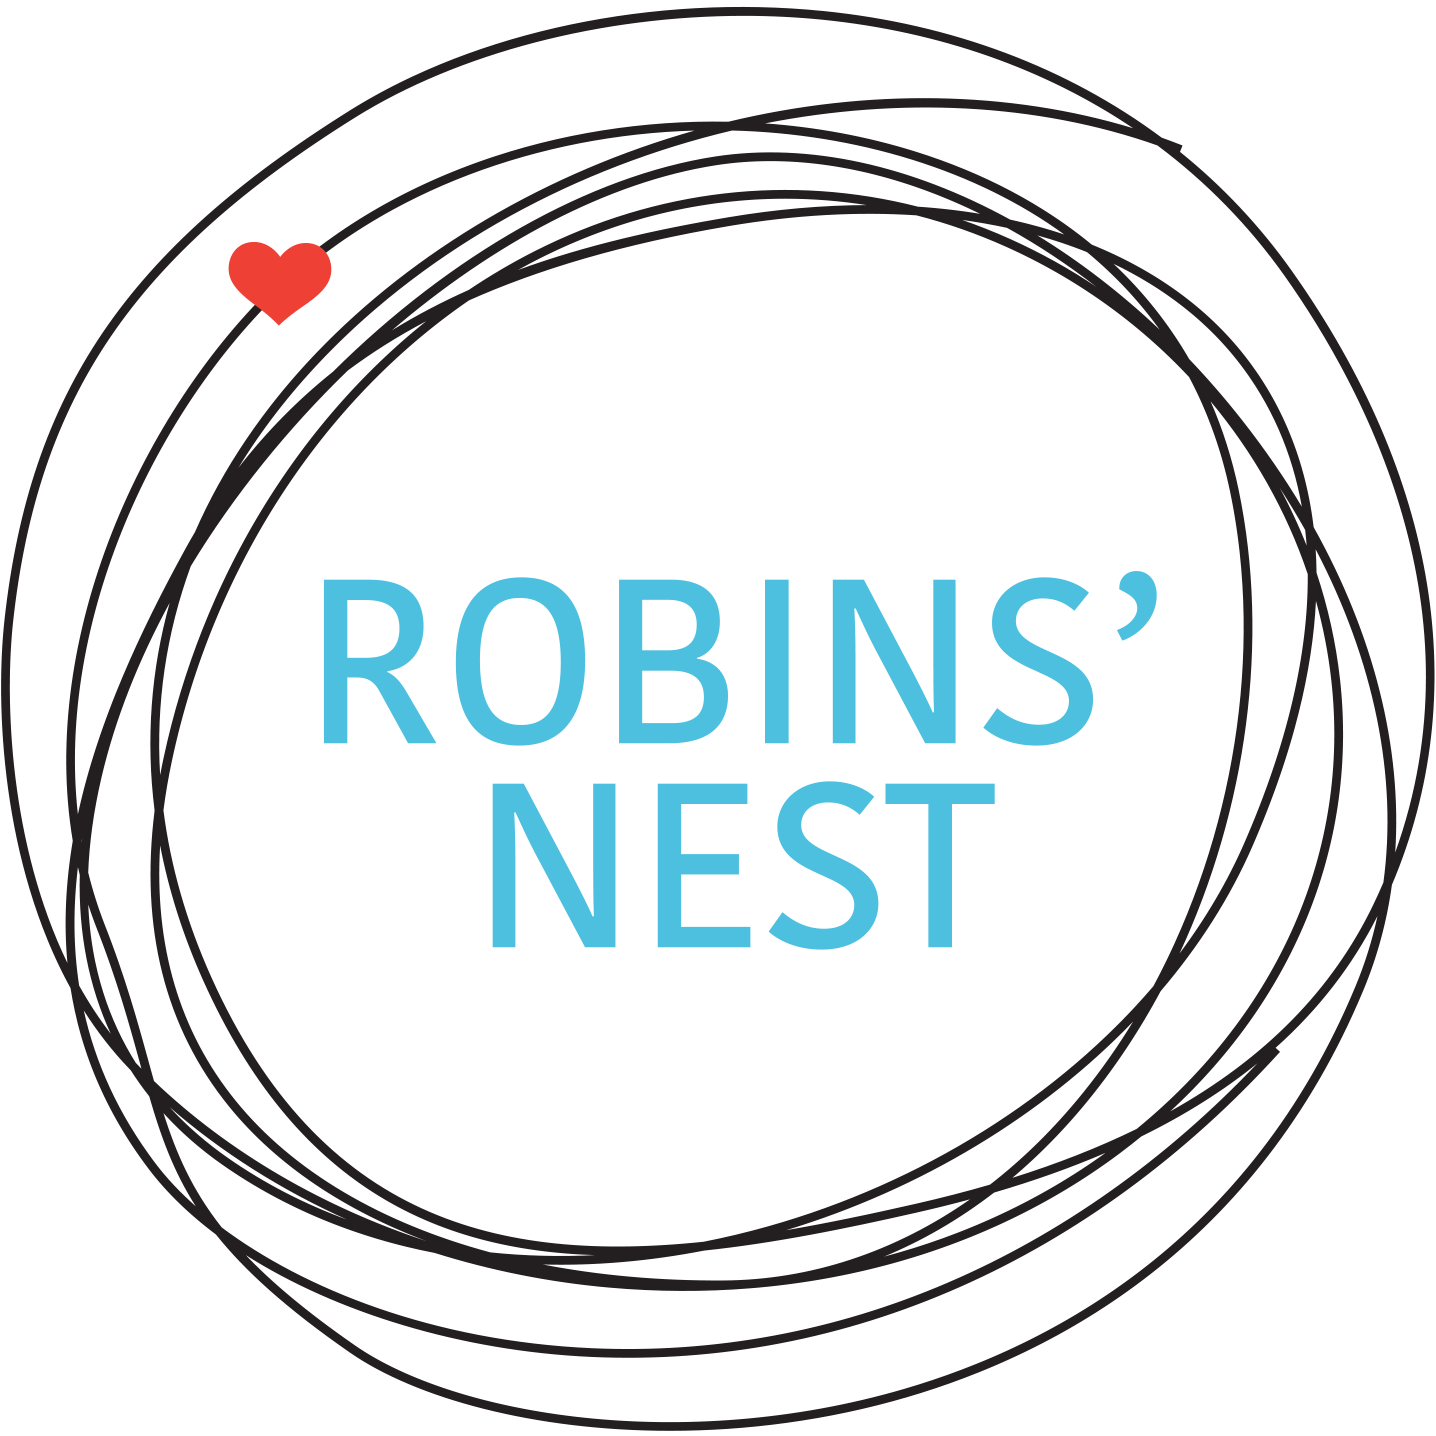 Robin's Nest Logo - Robins' Nest Inc